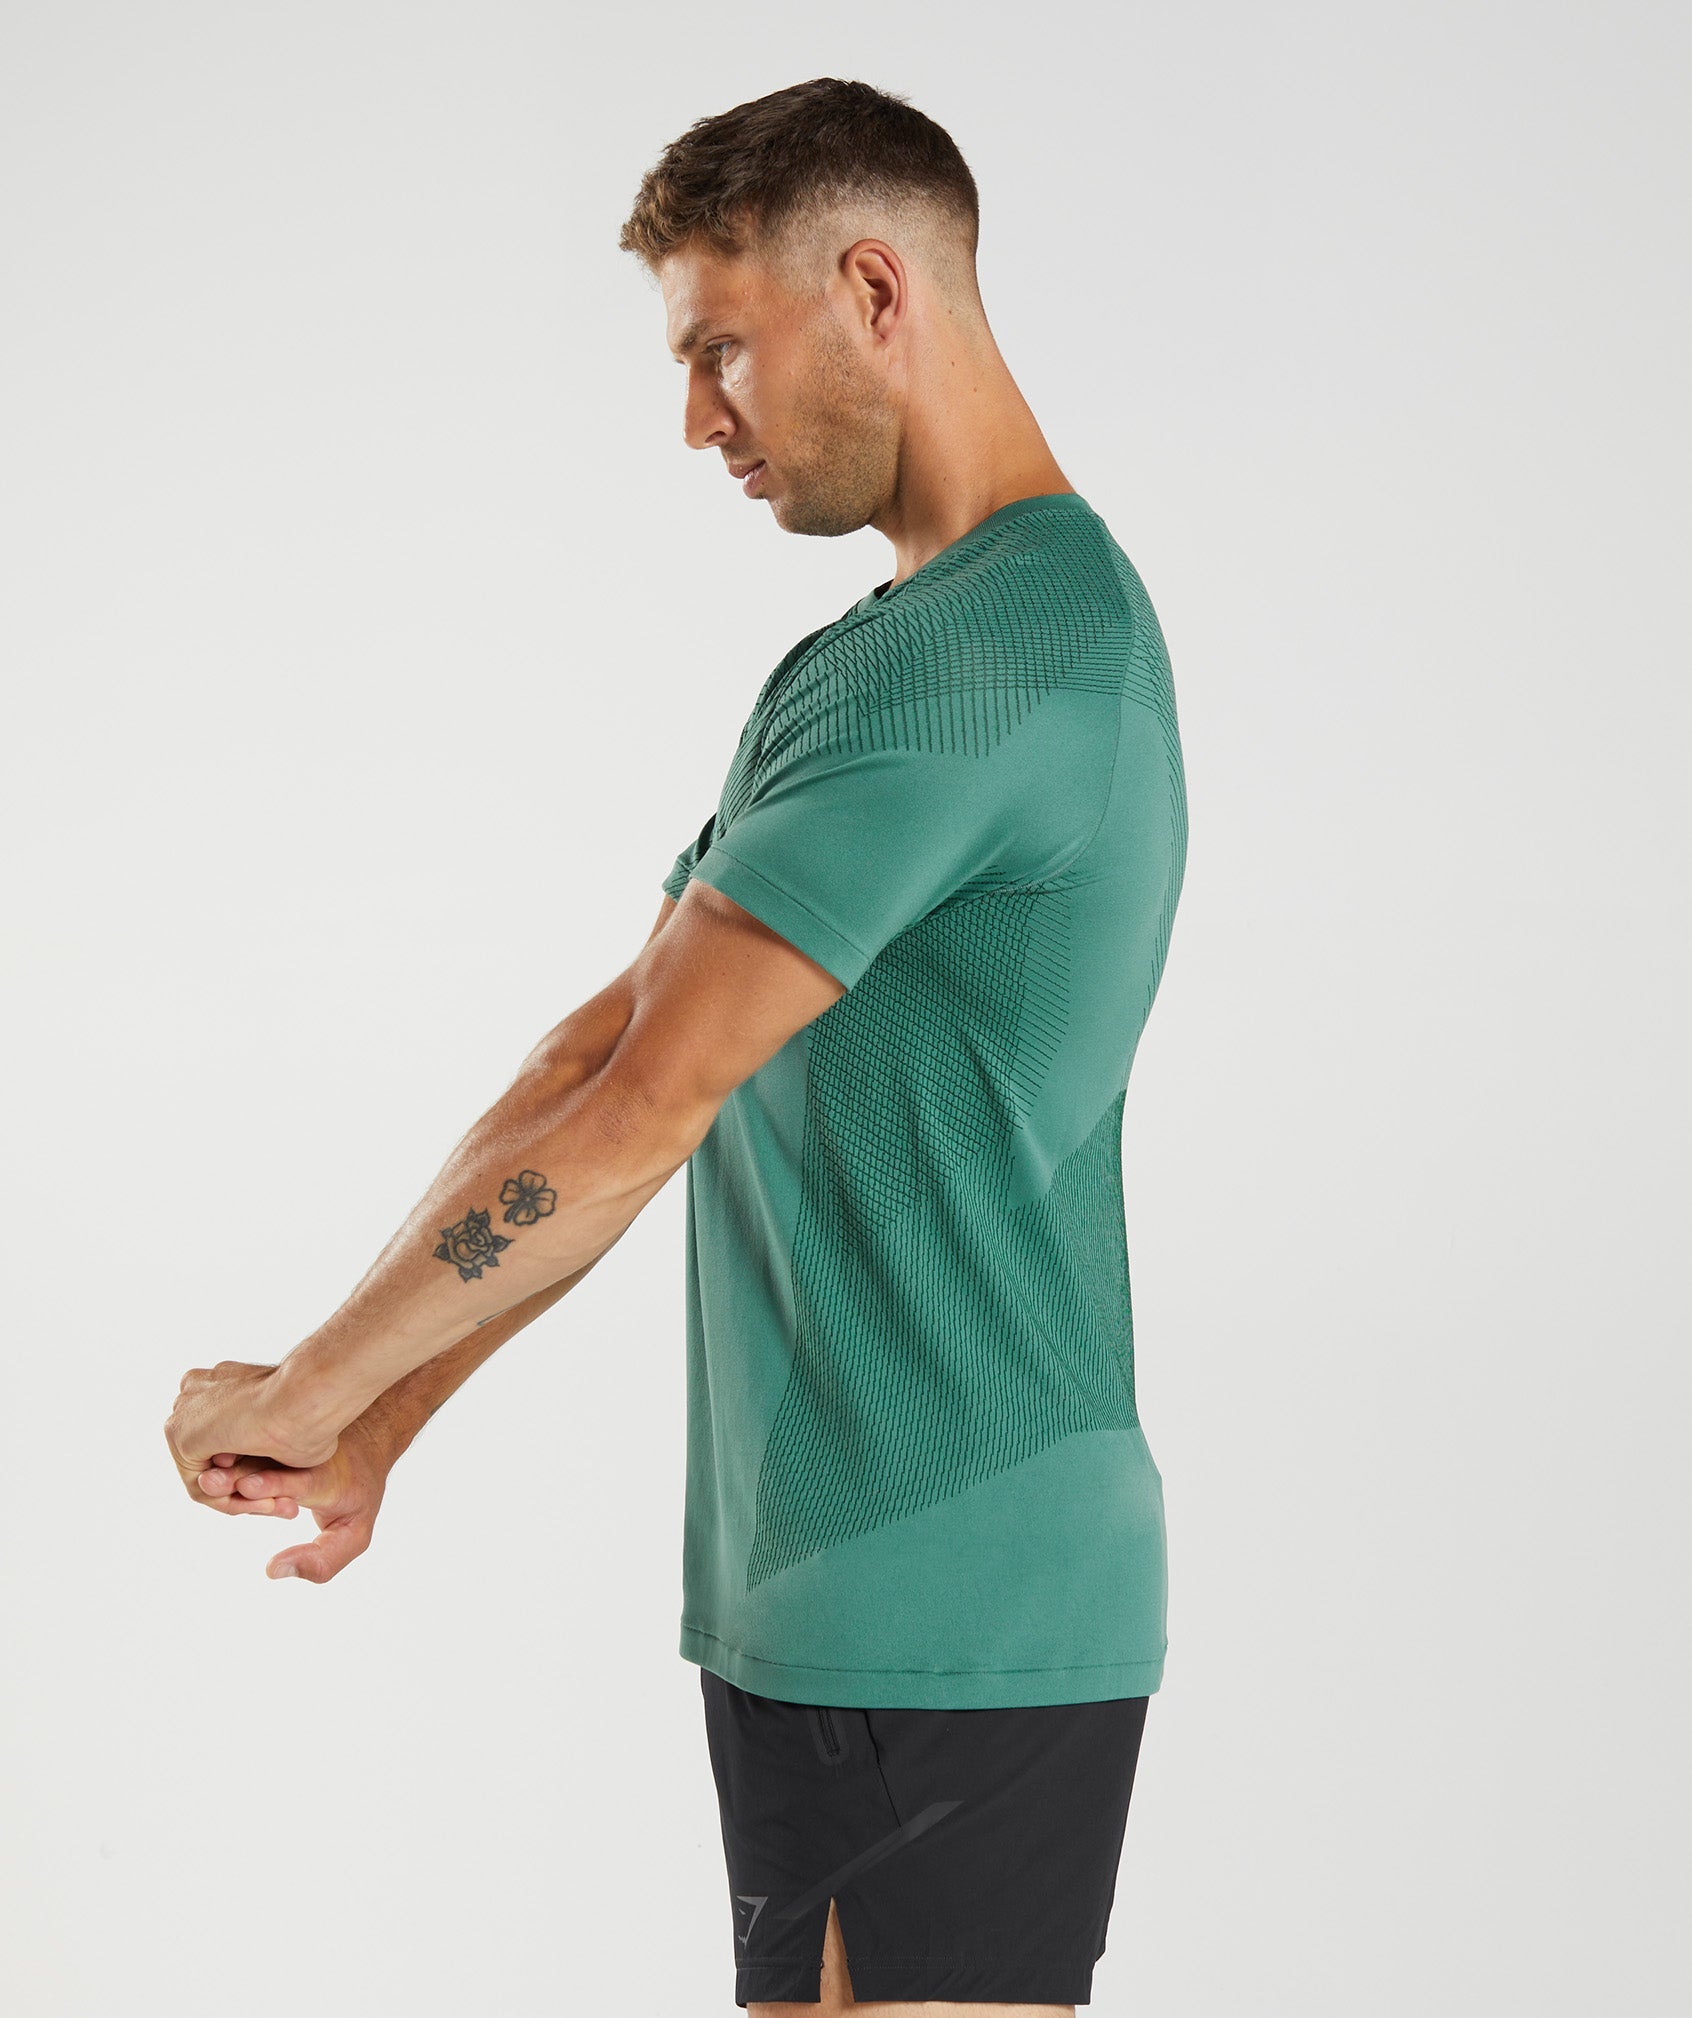 Apex Seamless T-Shirt in Hoya Green/Woodland Green